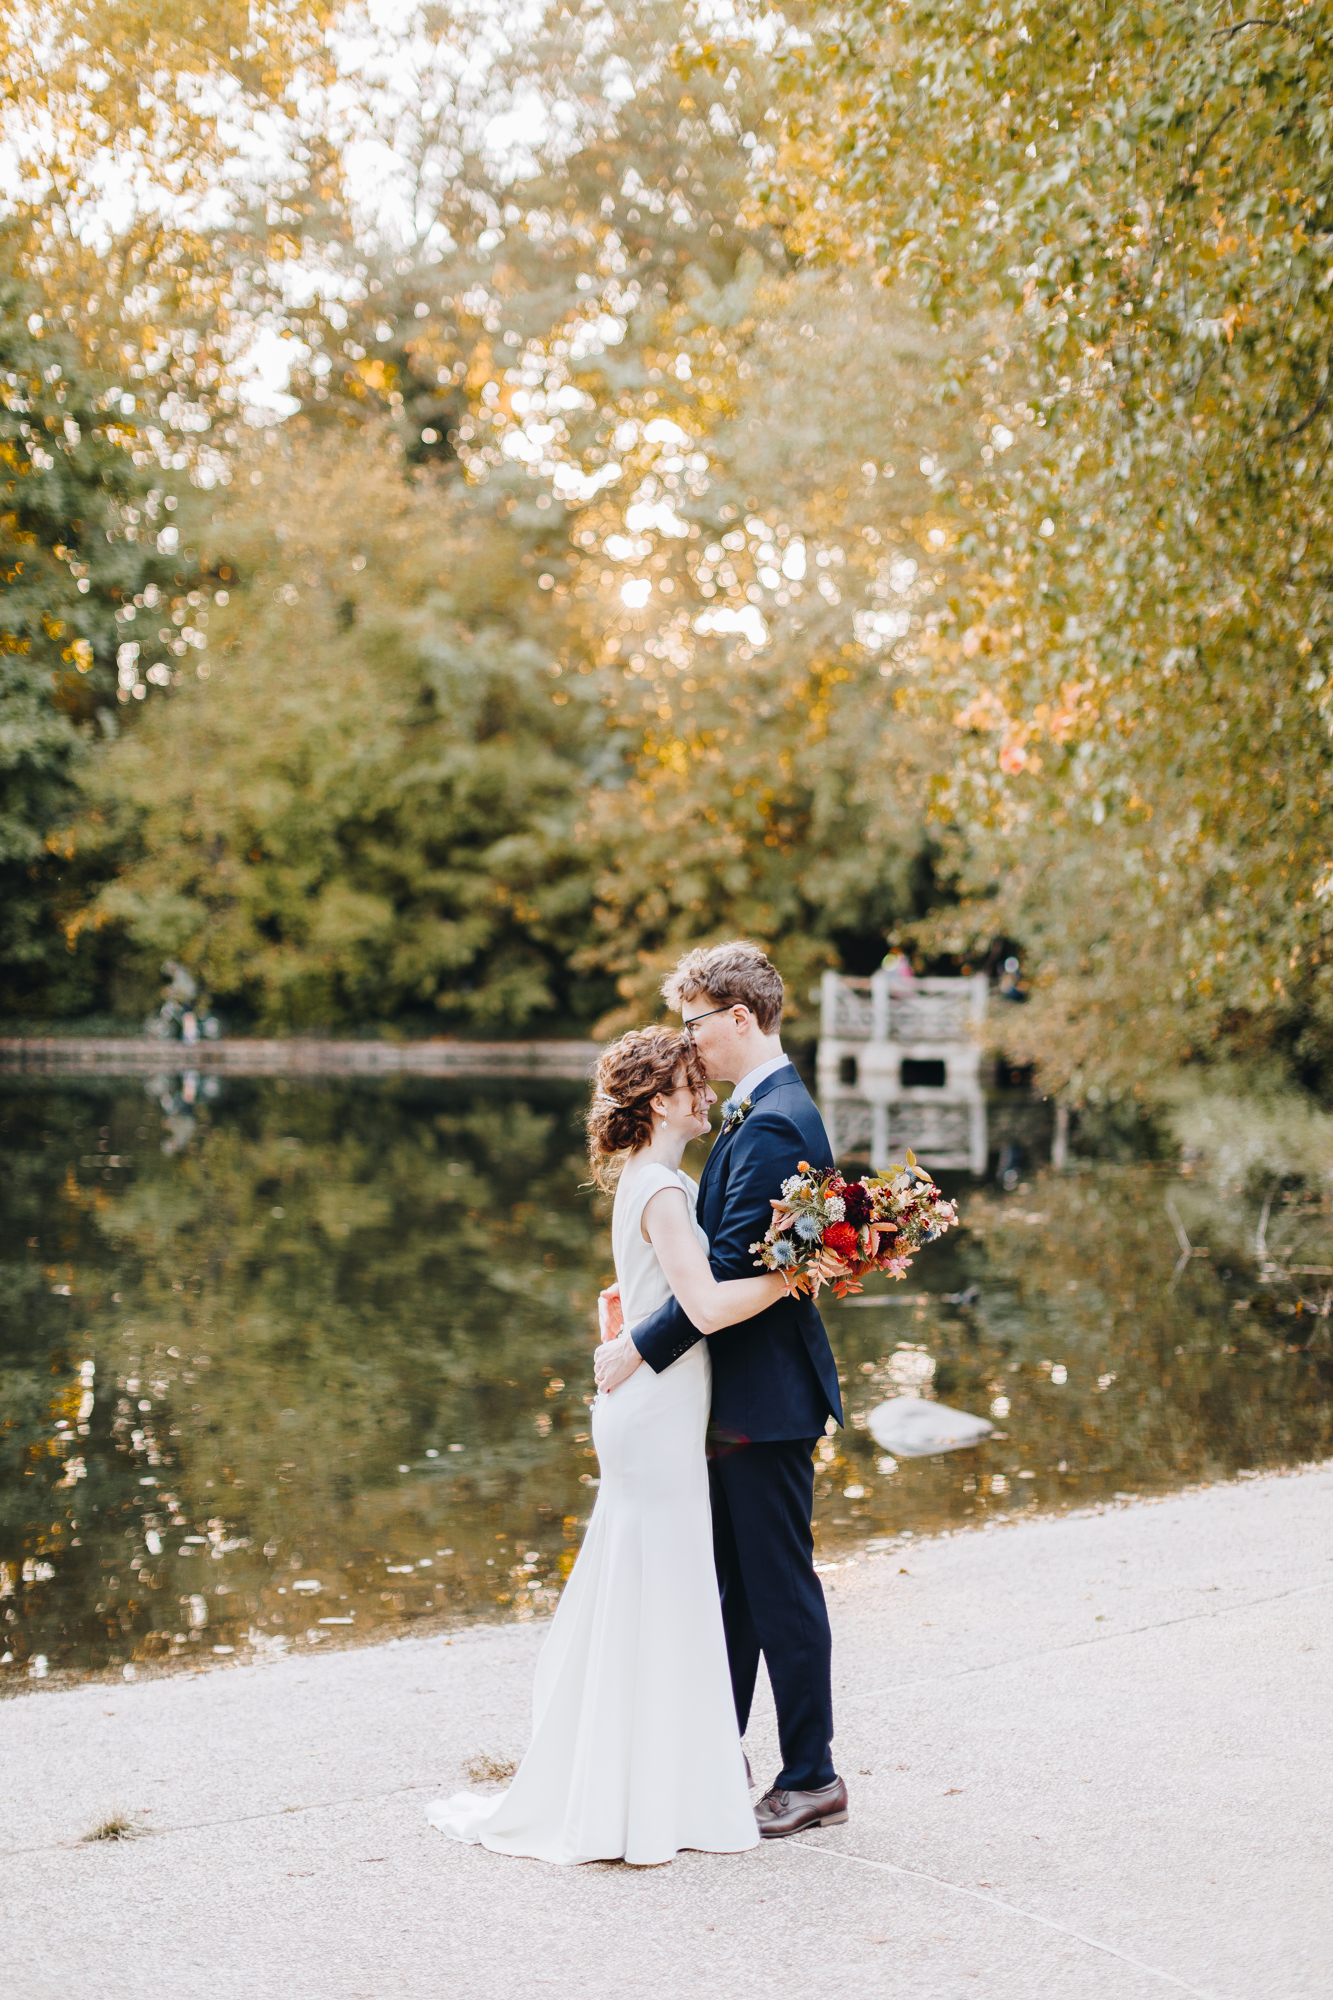 Romantic fall wedding photos in Prospect Park